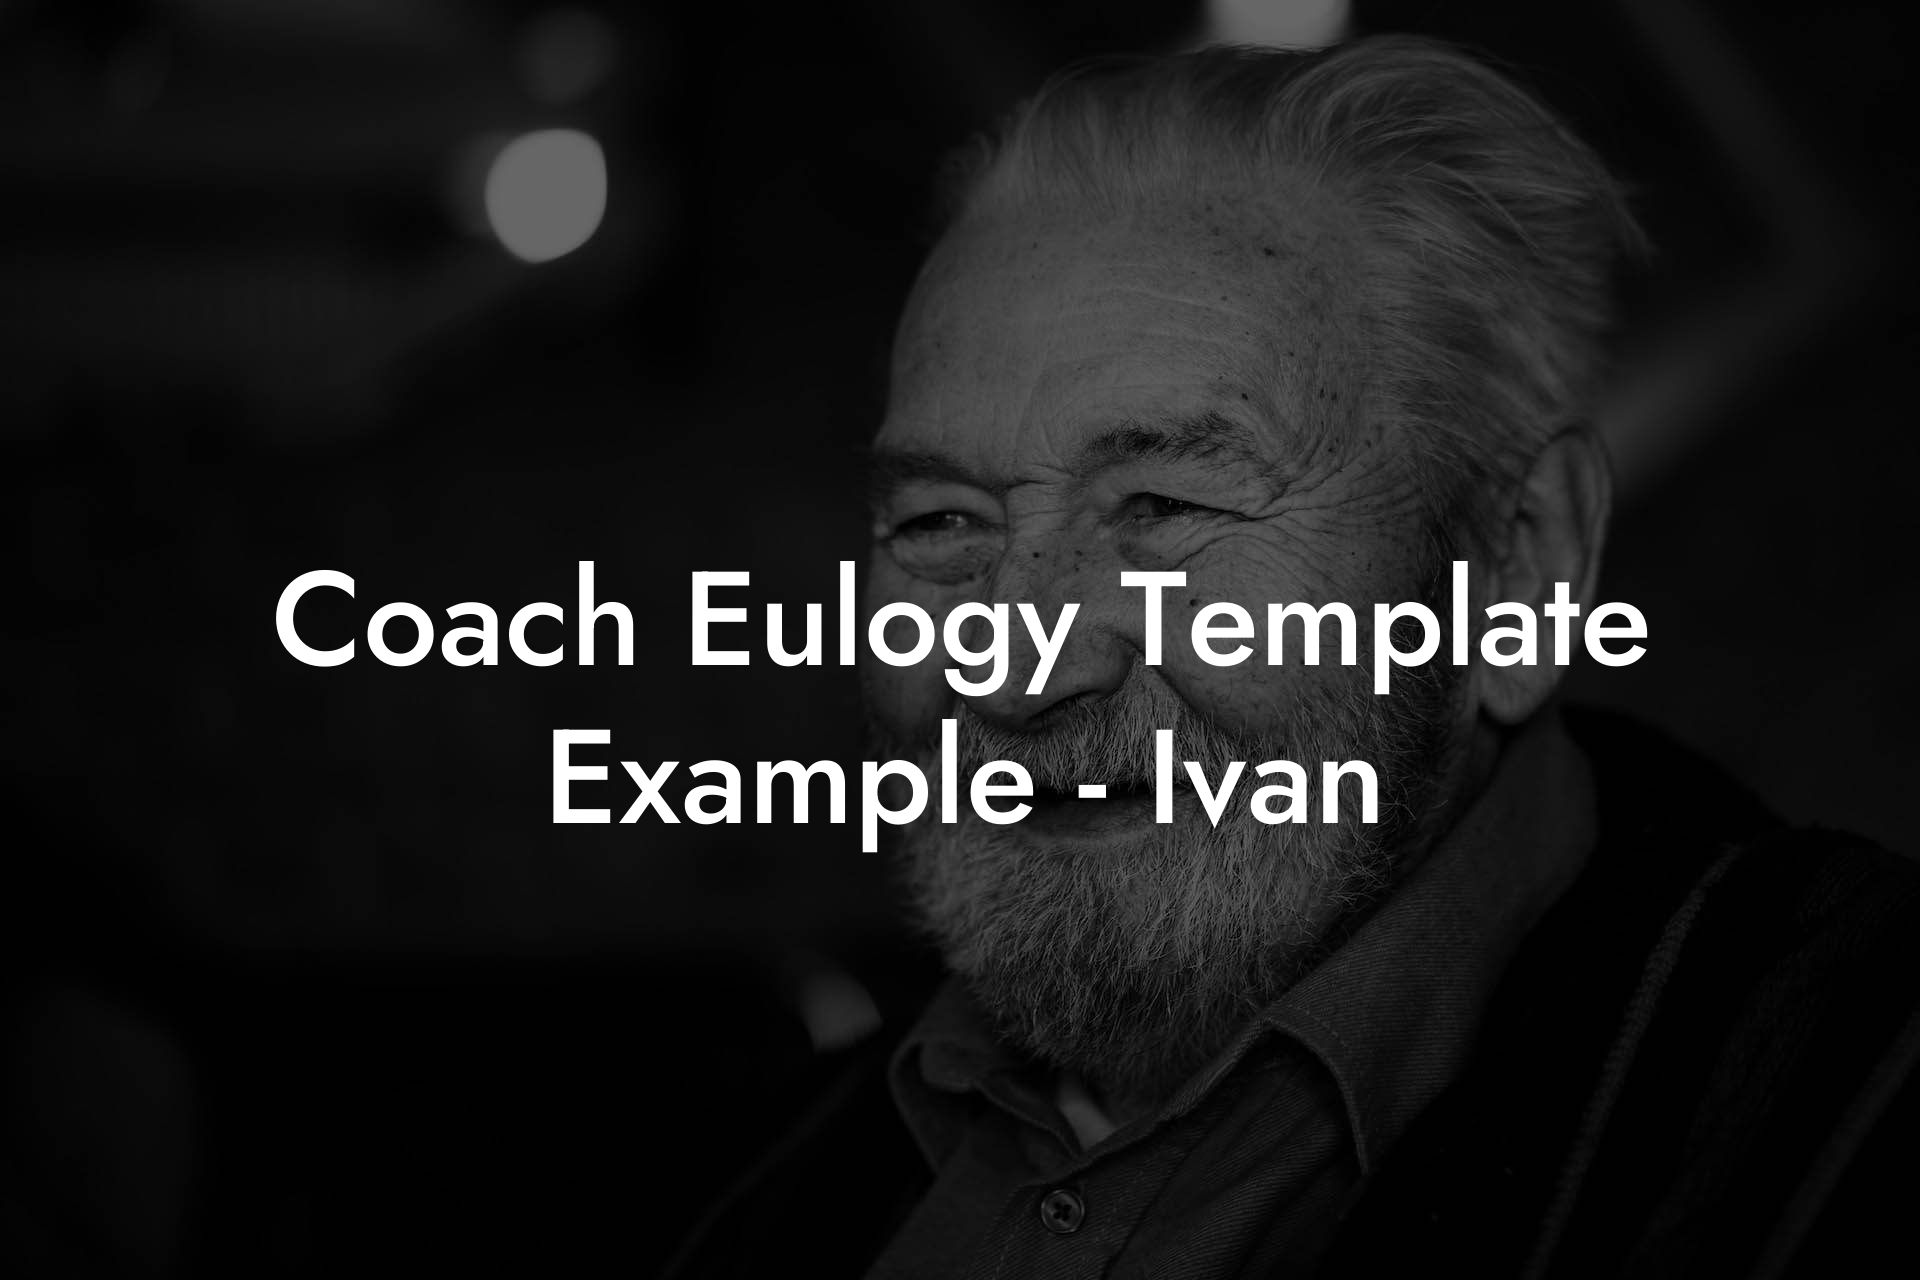 Coach Eulogy Template Example - Ivan